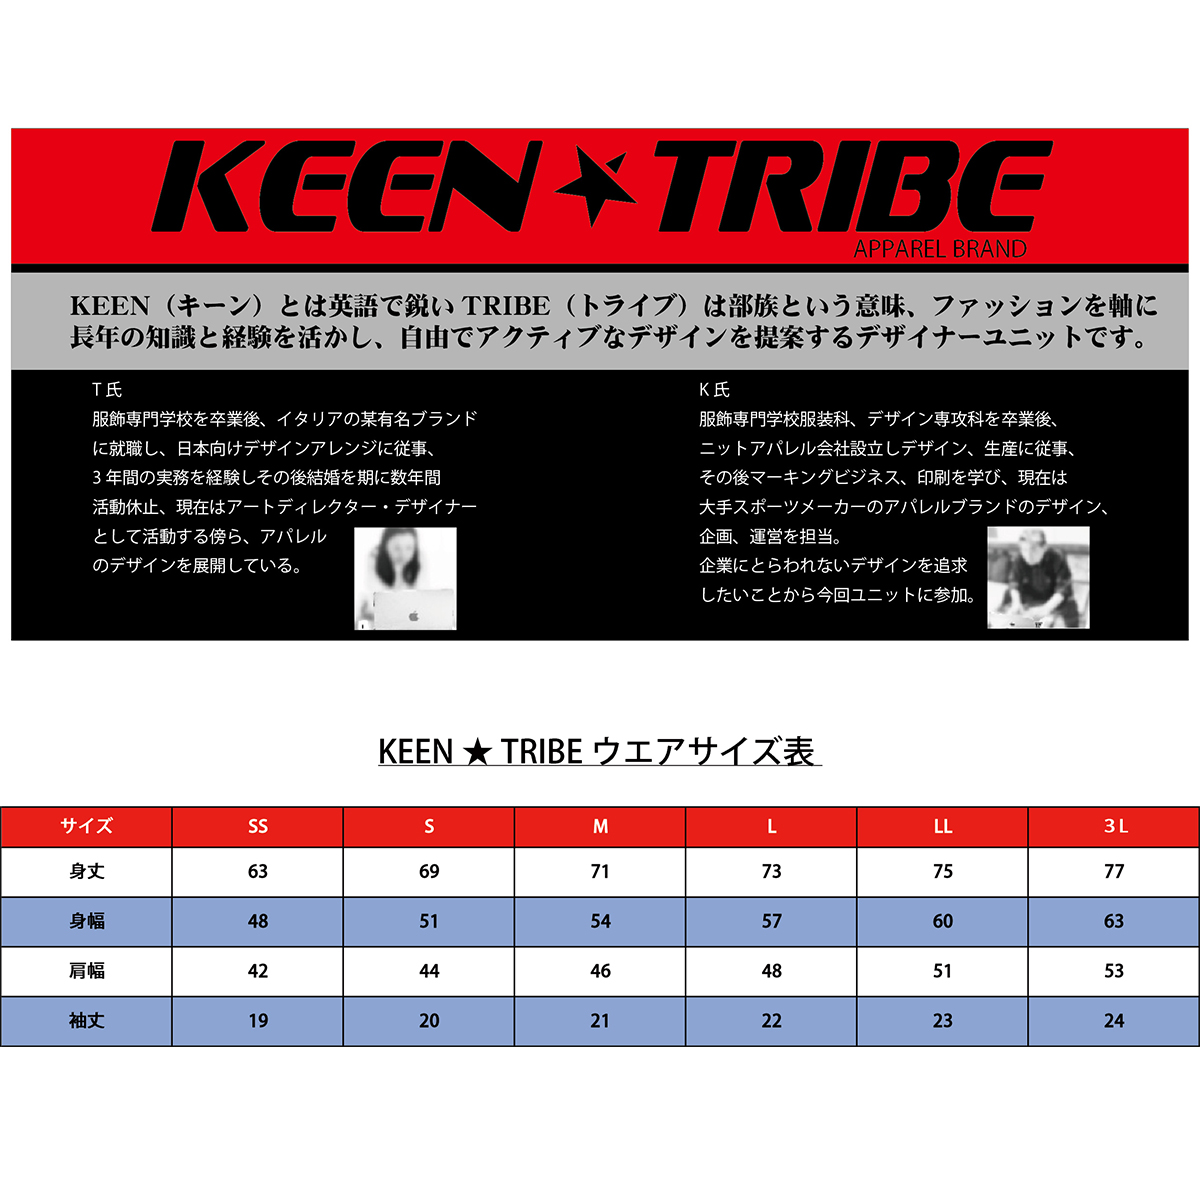 KEEN ★ TRIBE　KT-42(受注生産)【特別価格】